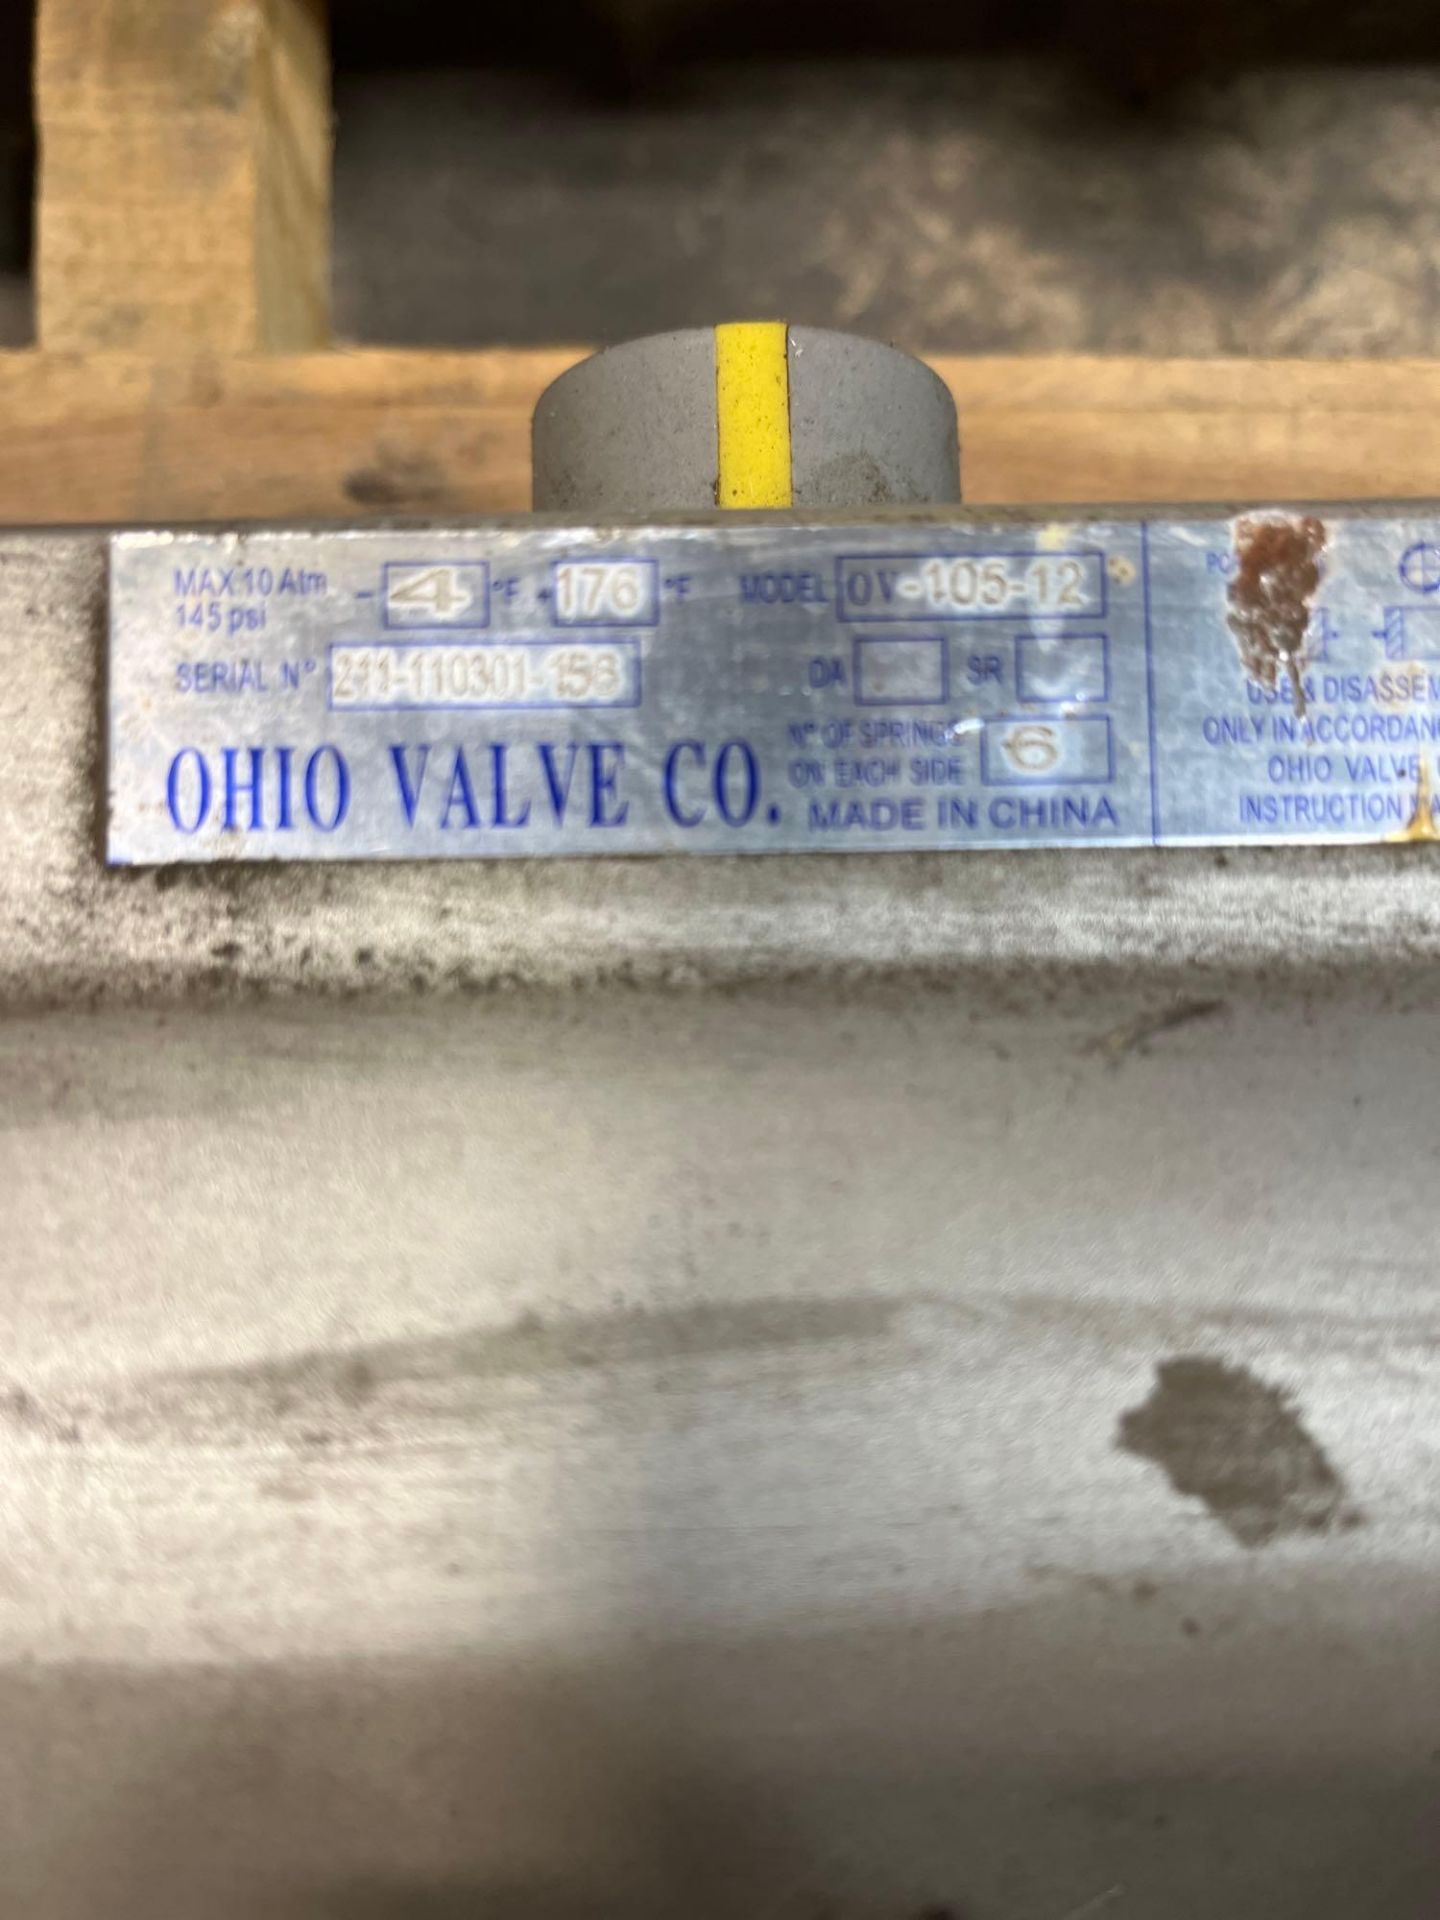 lot of Ohio valves - Image 2 of 2